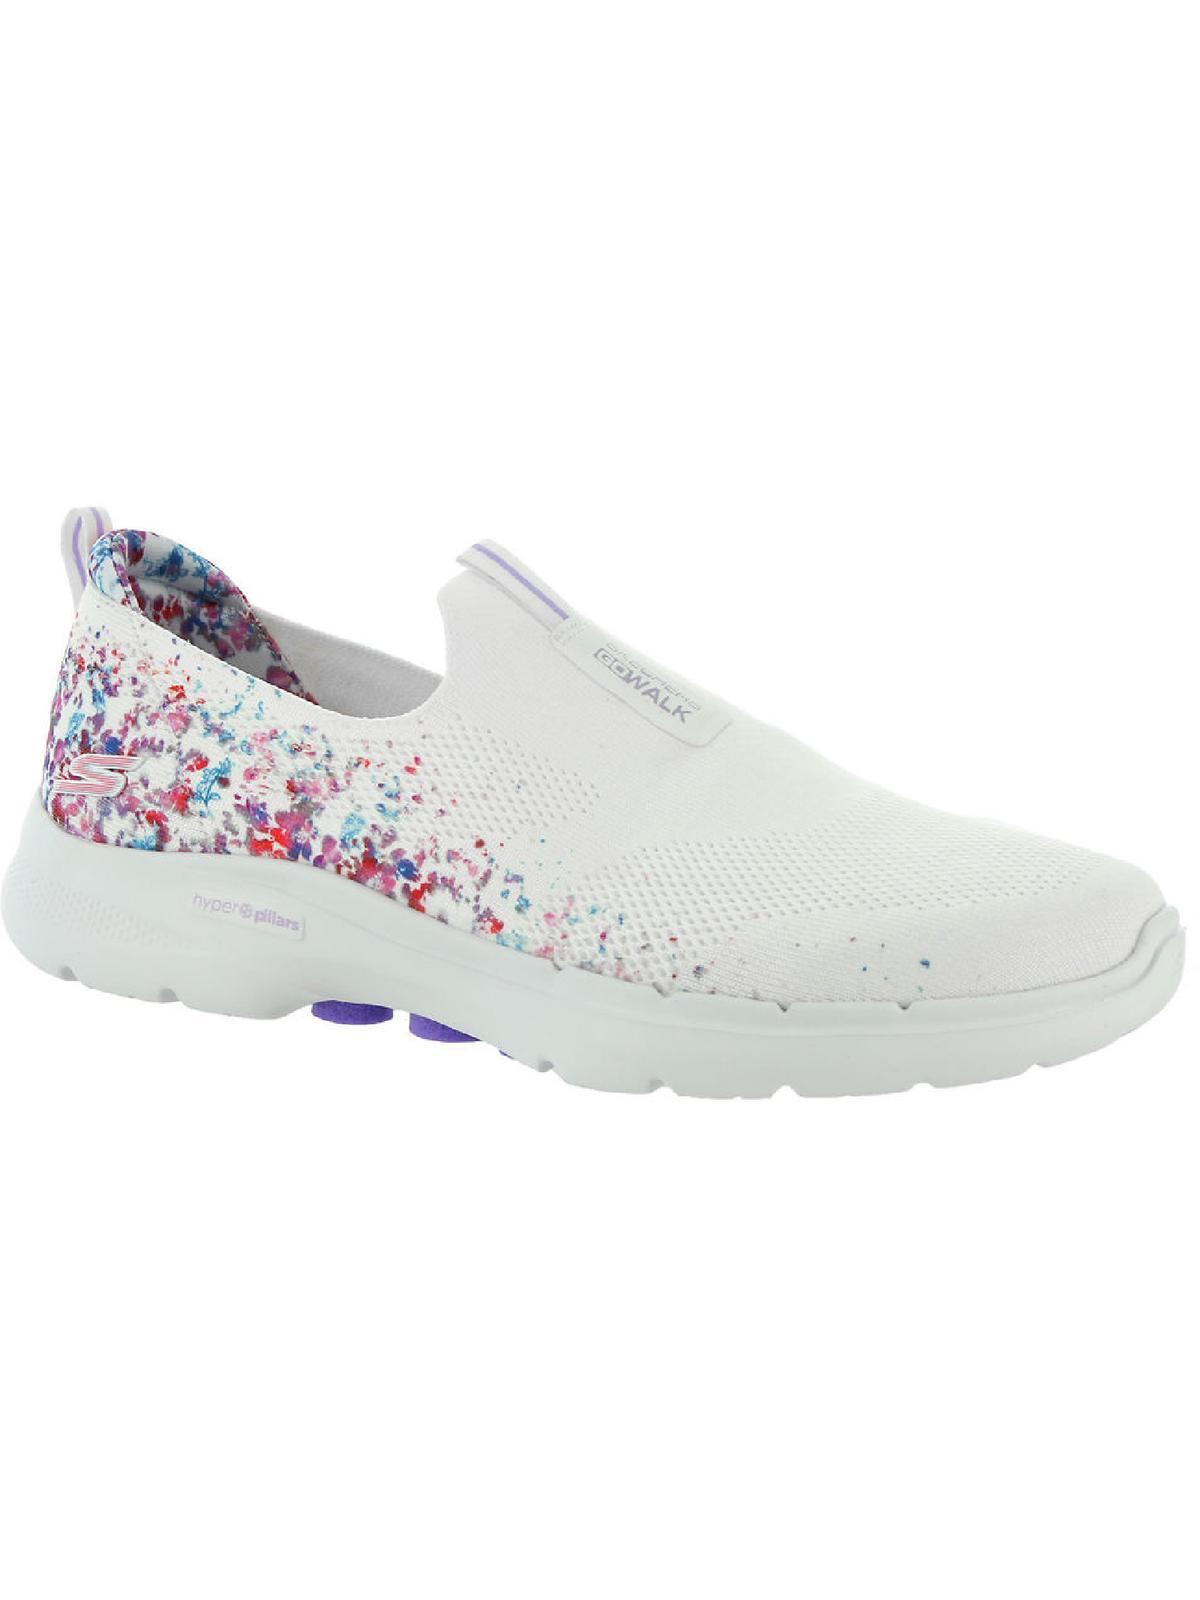 Walk 6 - Floral Active Memory Foam Slip-on Sneakers in | Lyst